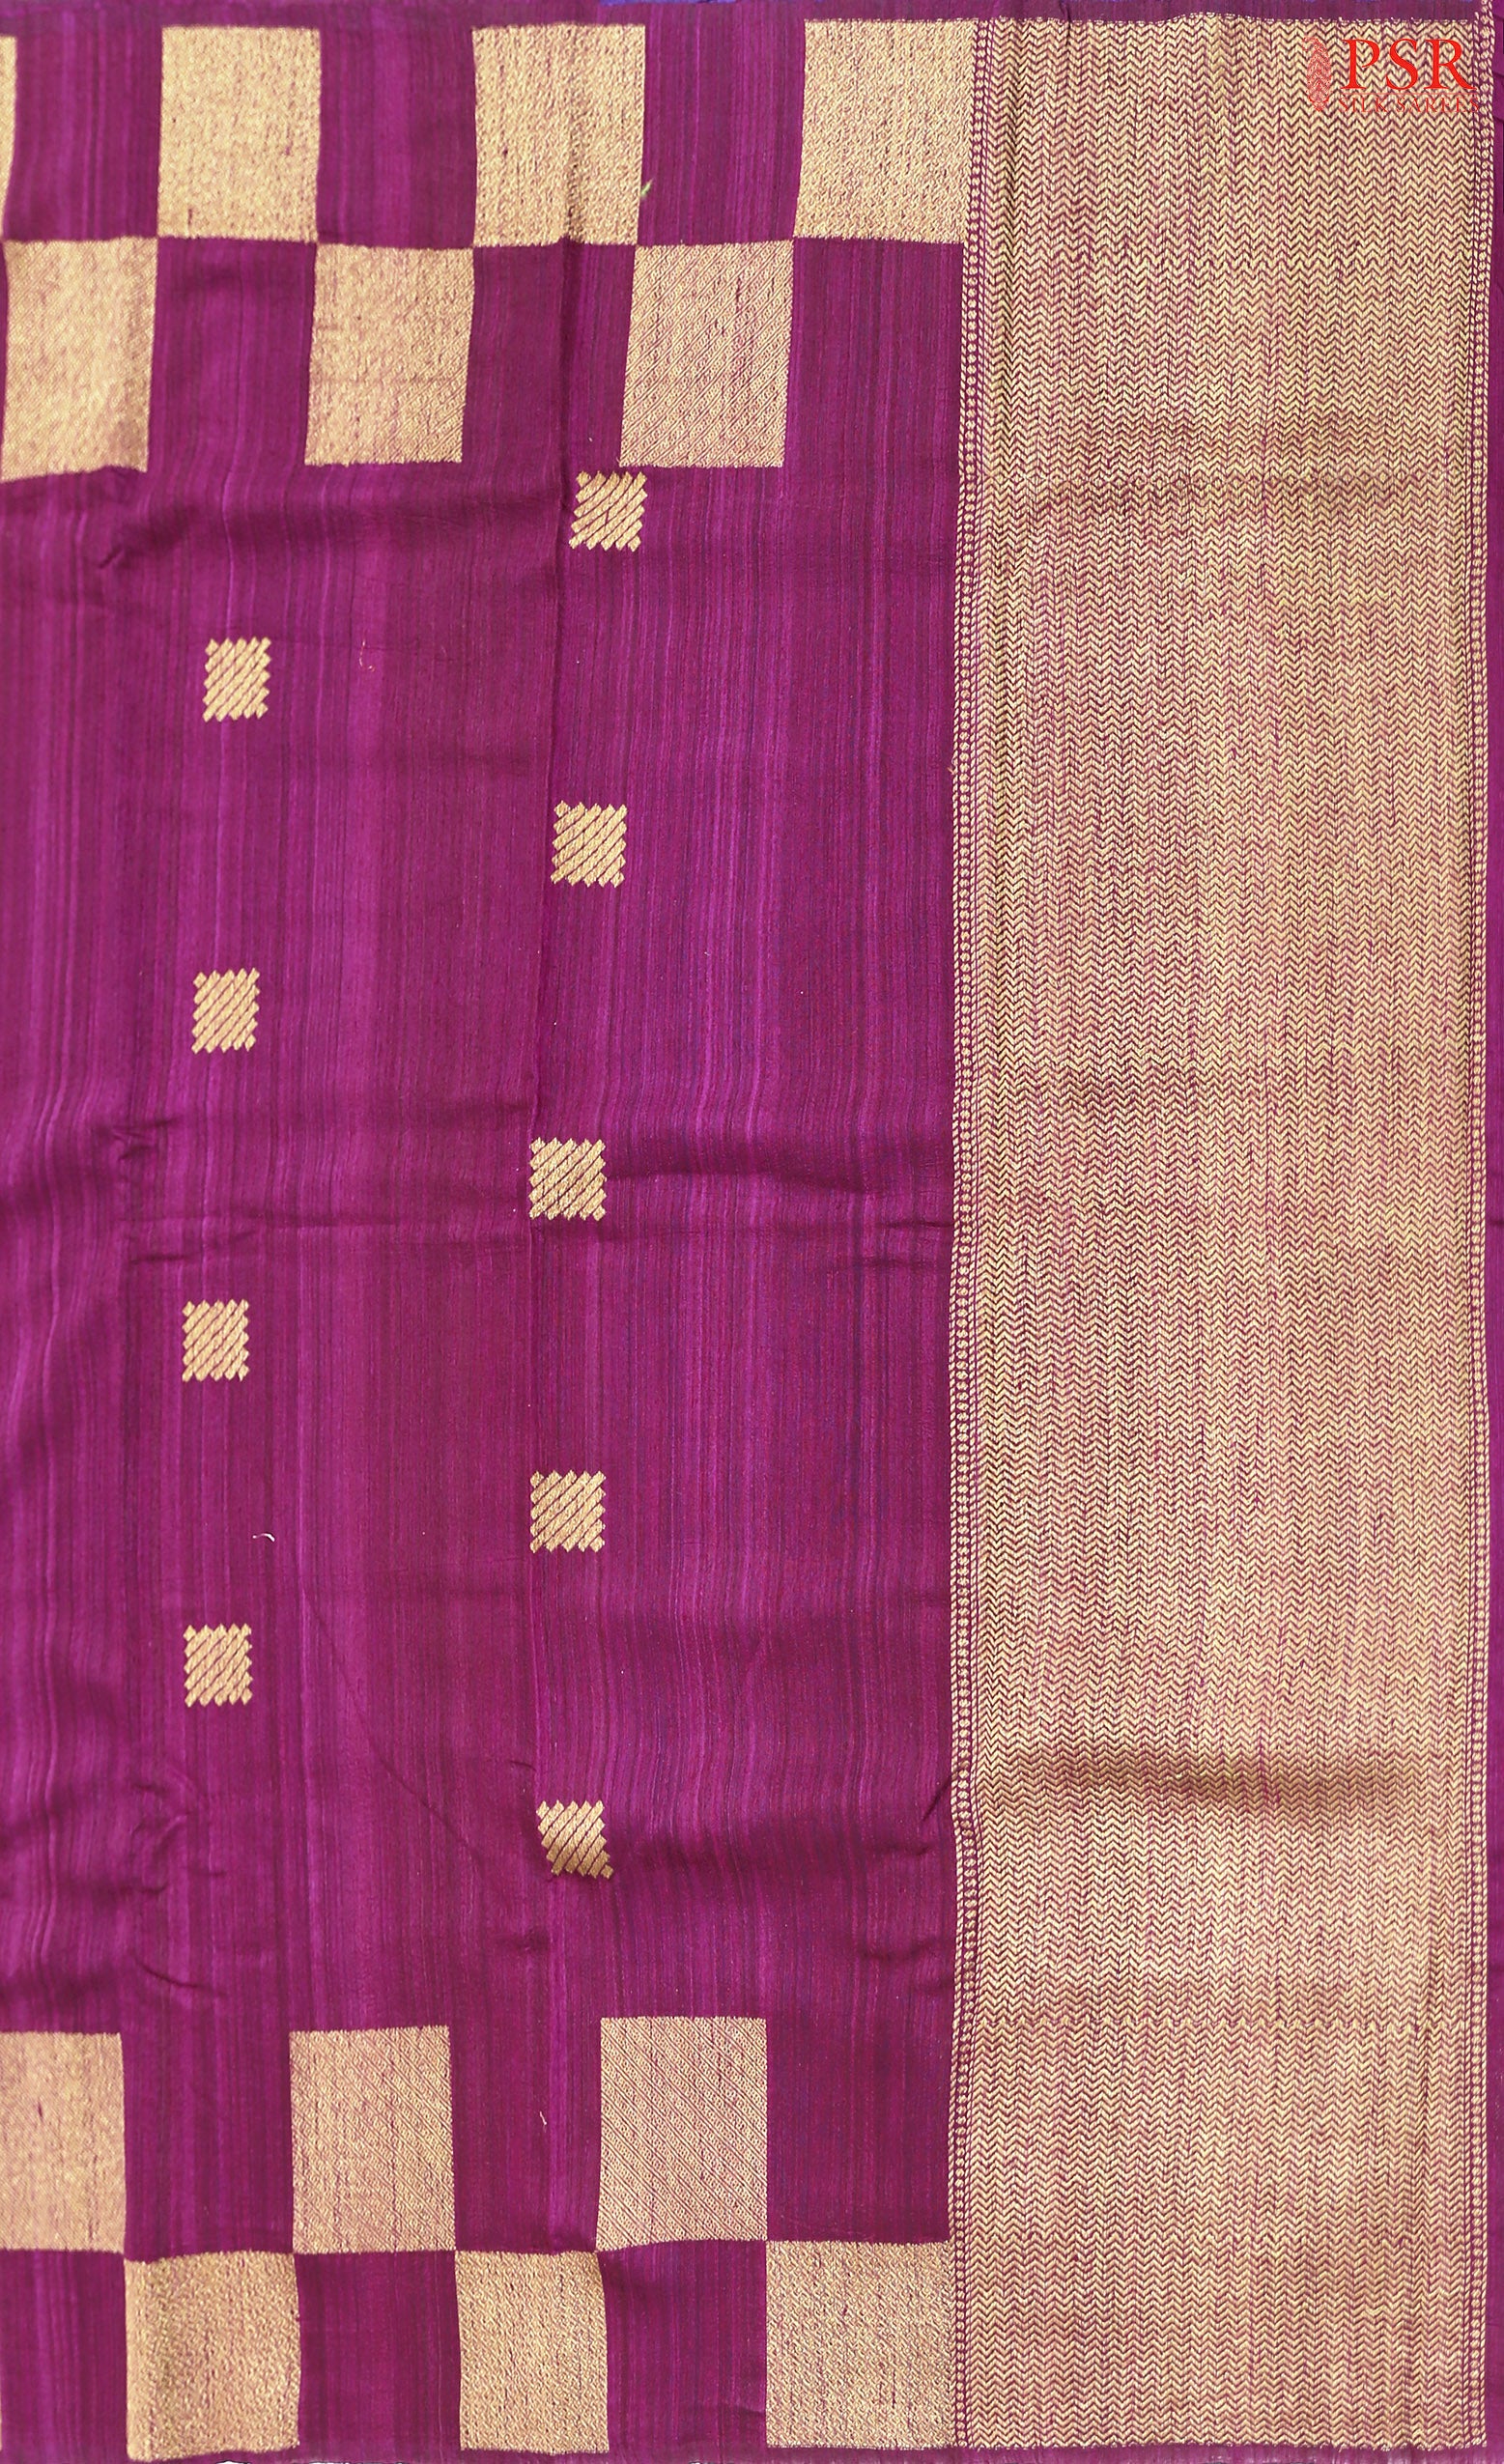 Tyrian Purple Banarasi Jute Silk Saree